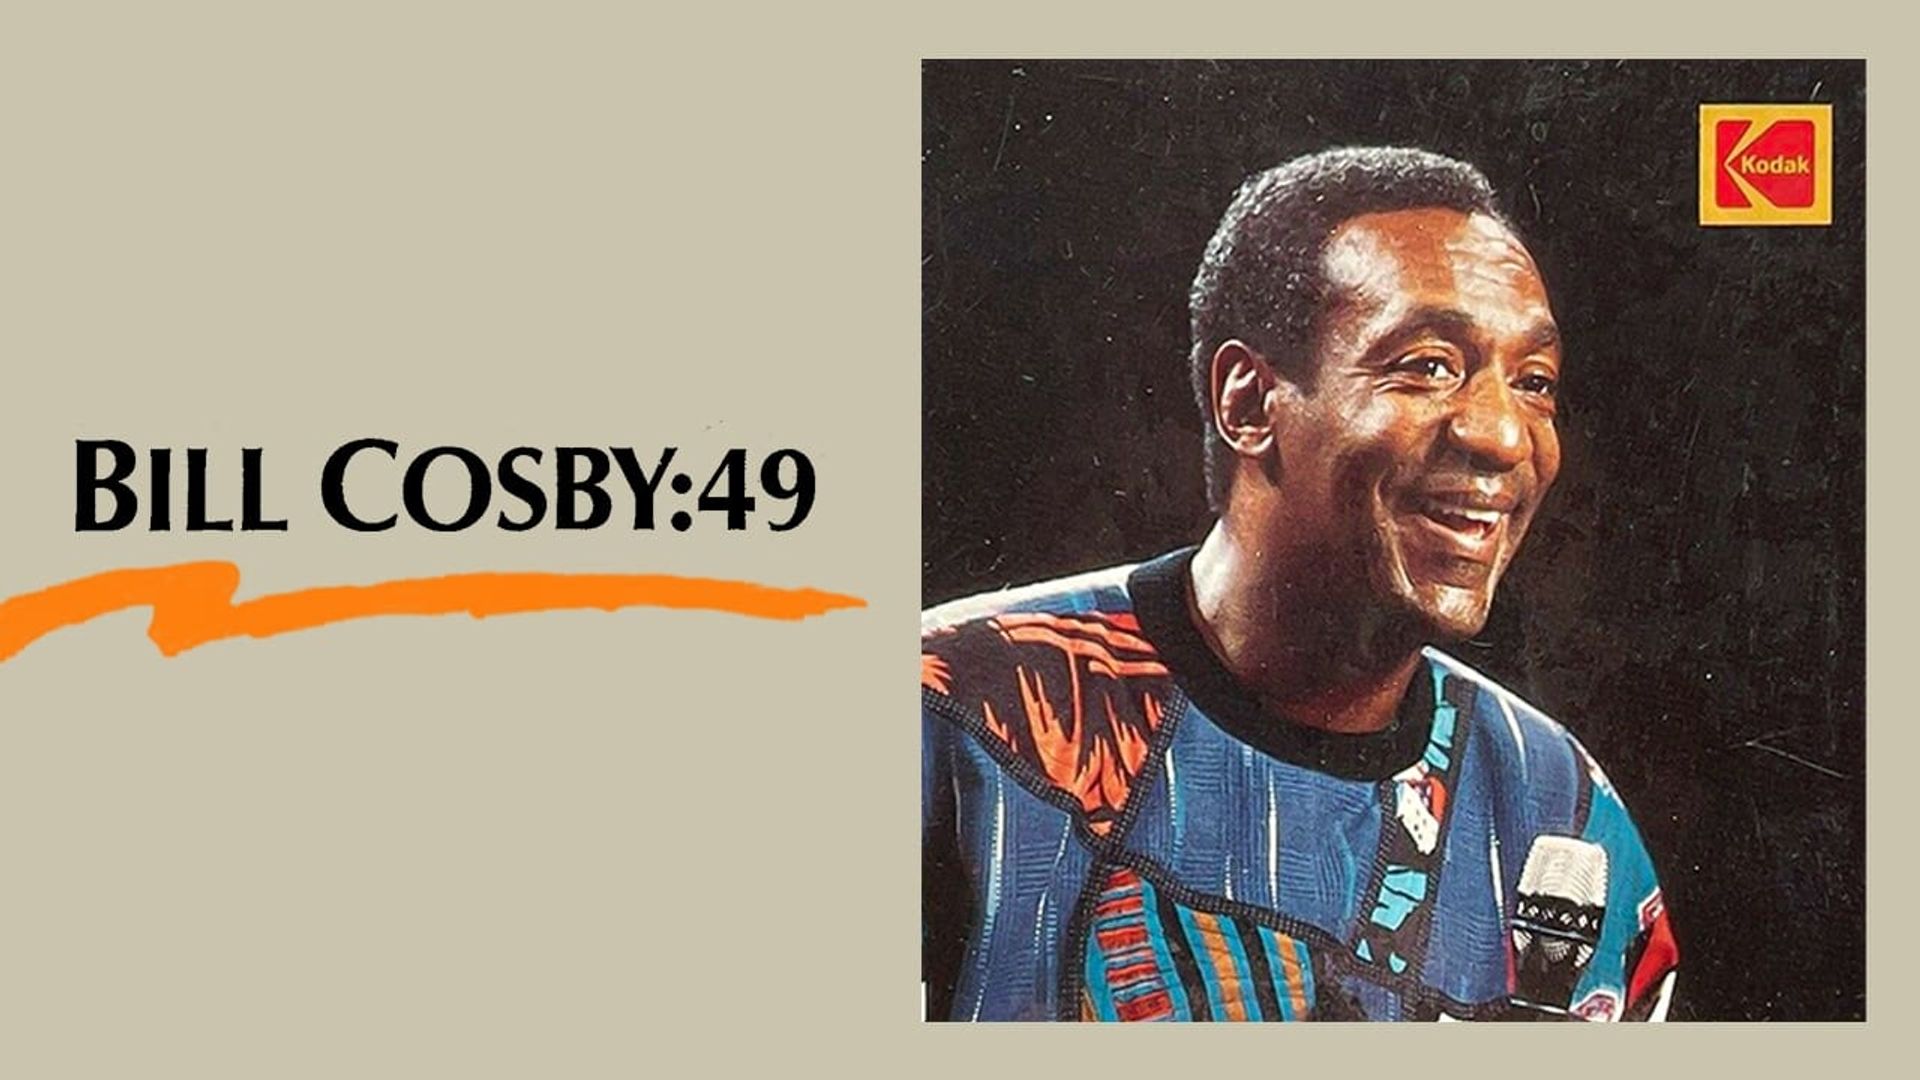 Bill Cosby: 49 background